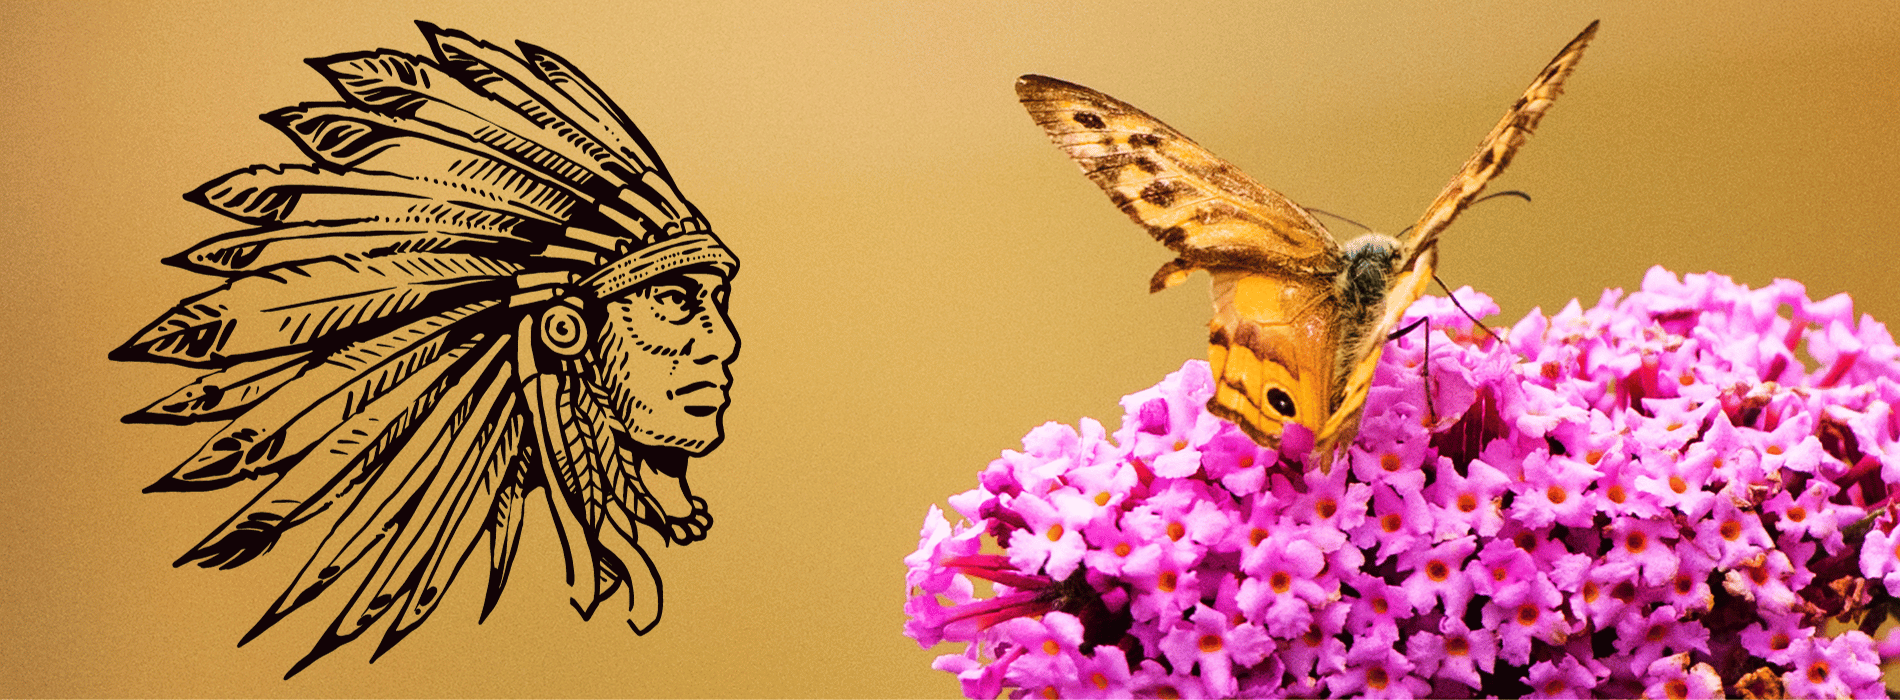 simbolismo de la mariposa nativa americana